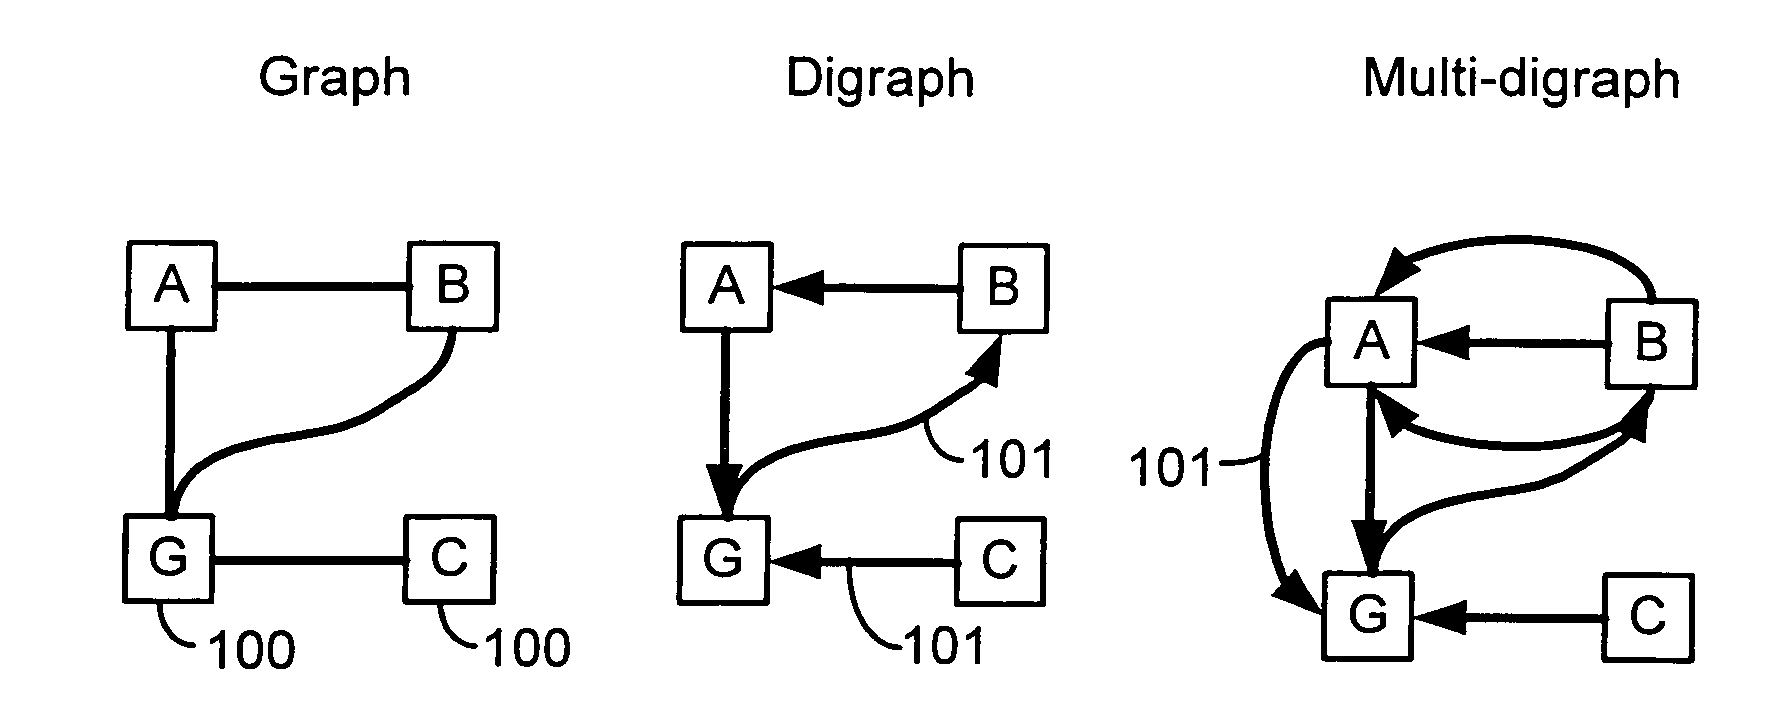 Digraph network superframes